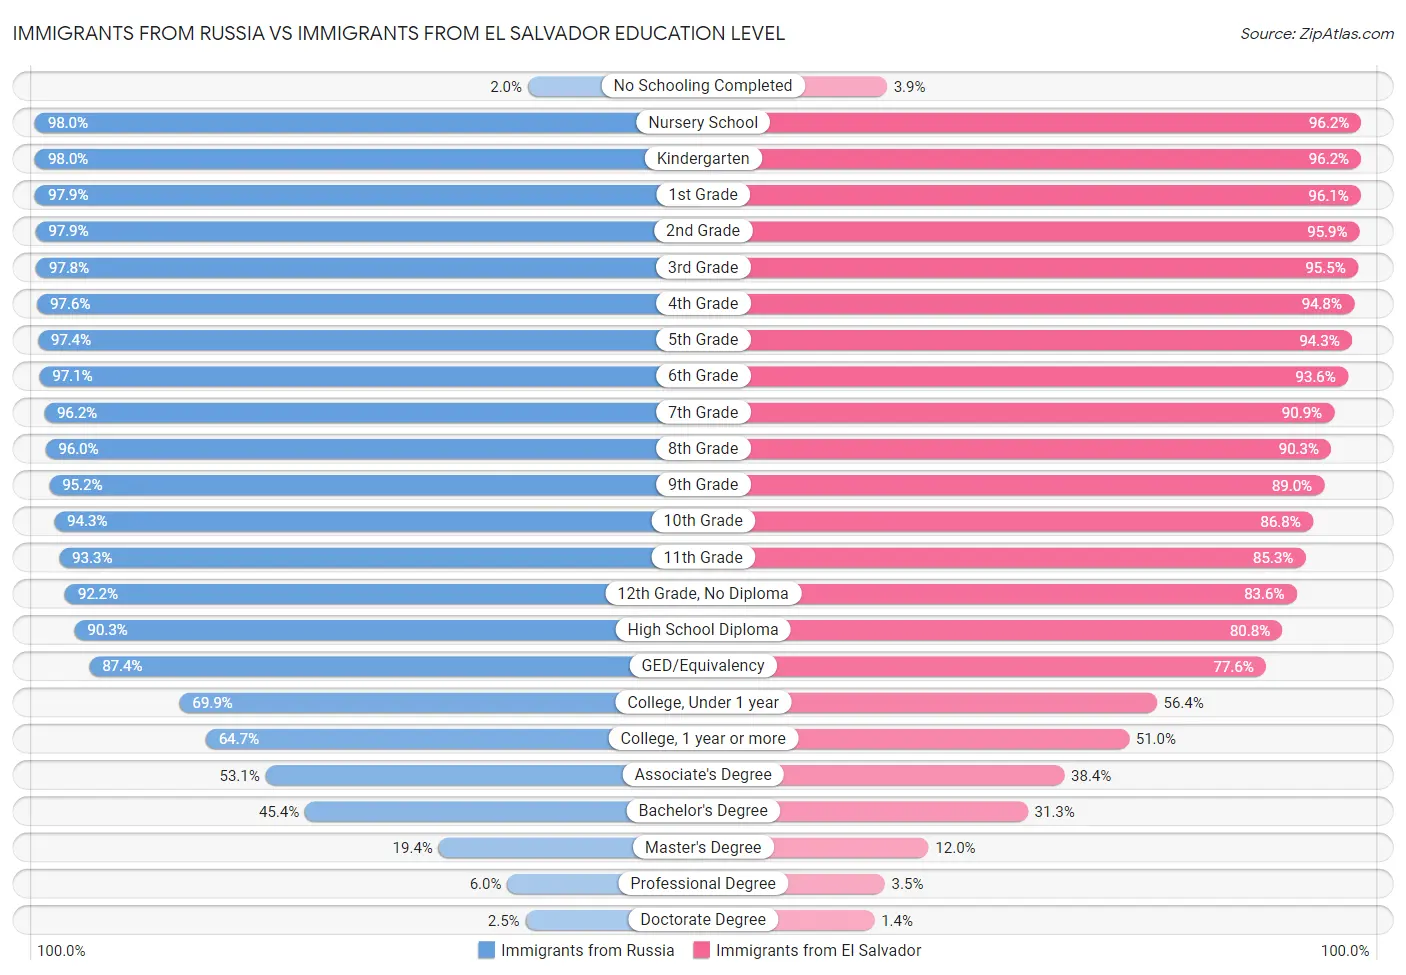 Immigrants from Russia vs Immigrants from El Salvador Education Level